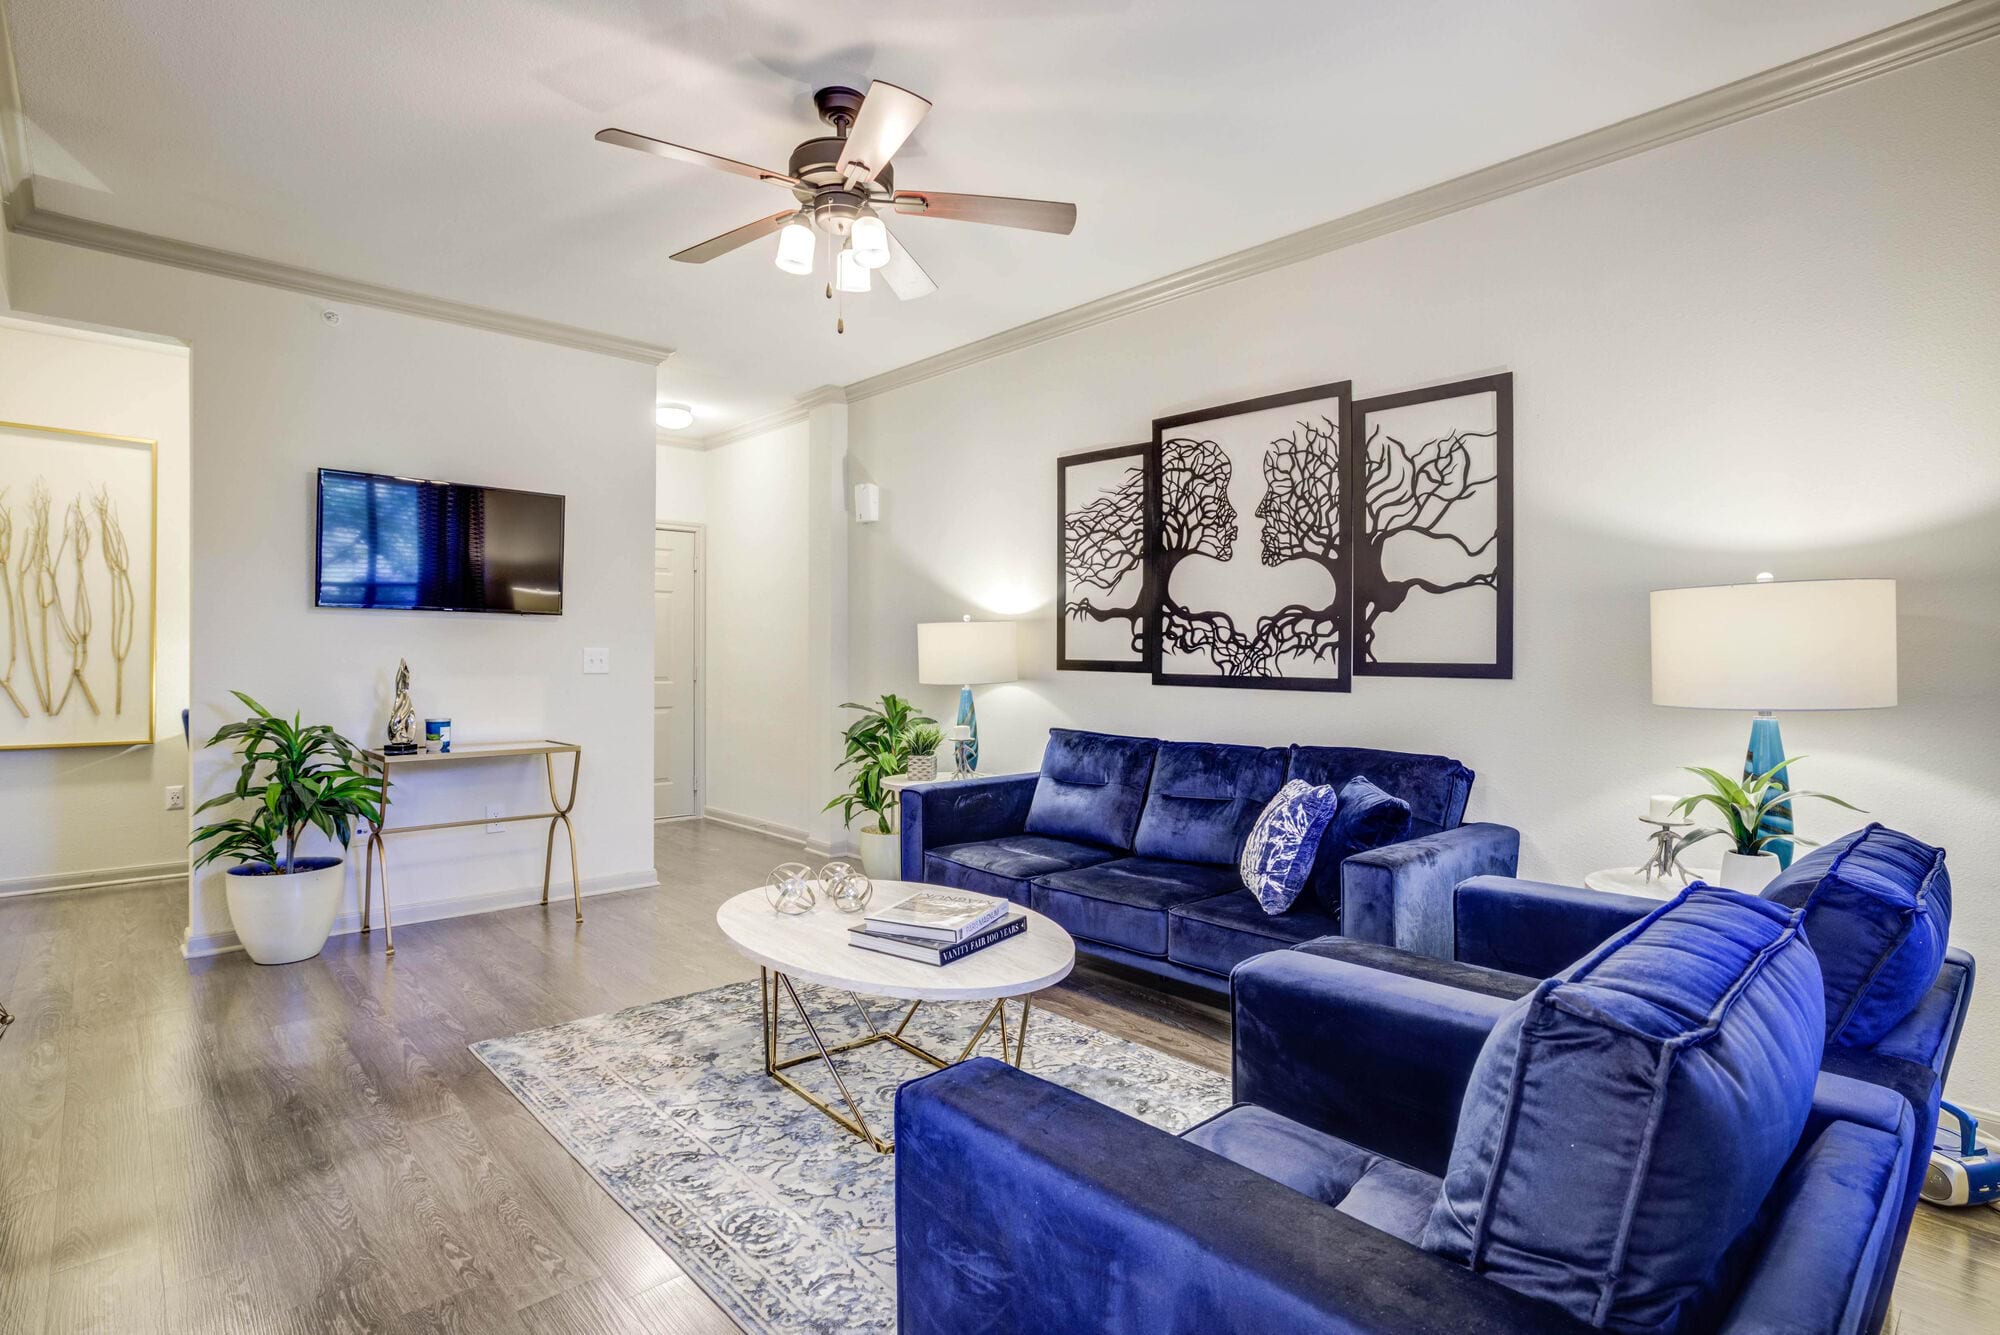 Best Luxury Apartments For Rent in San Antonio TX - 5,237 Rentals